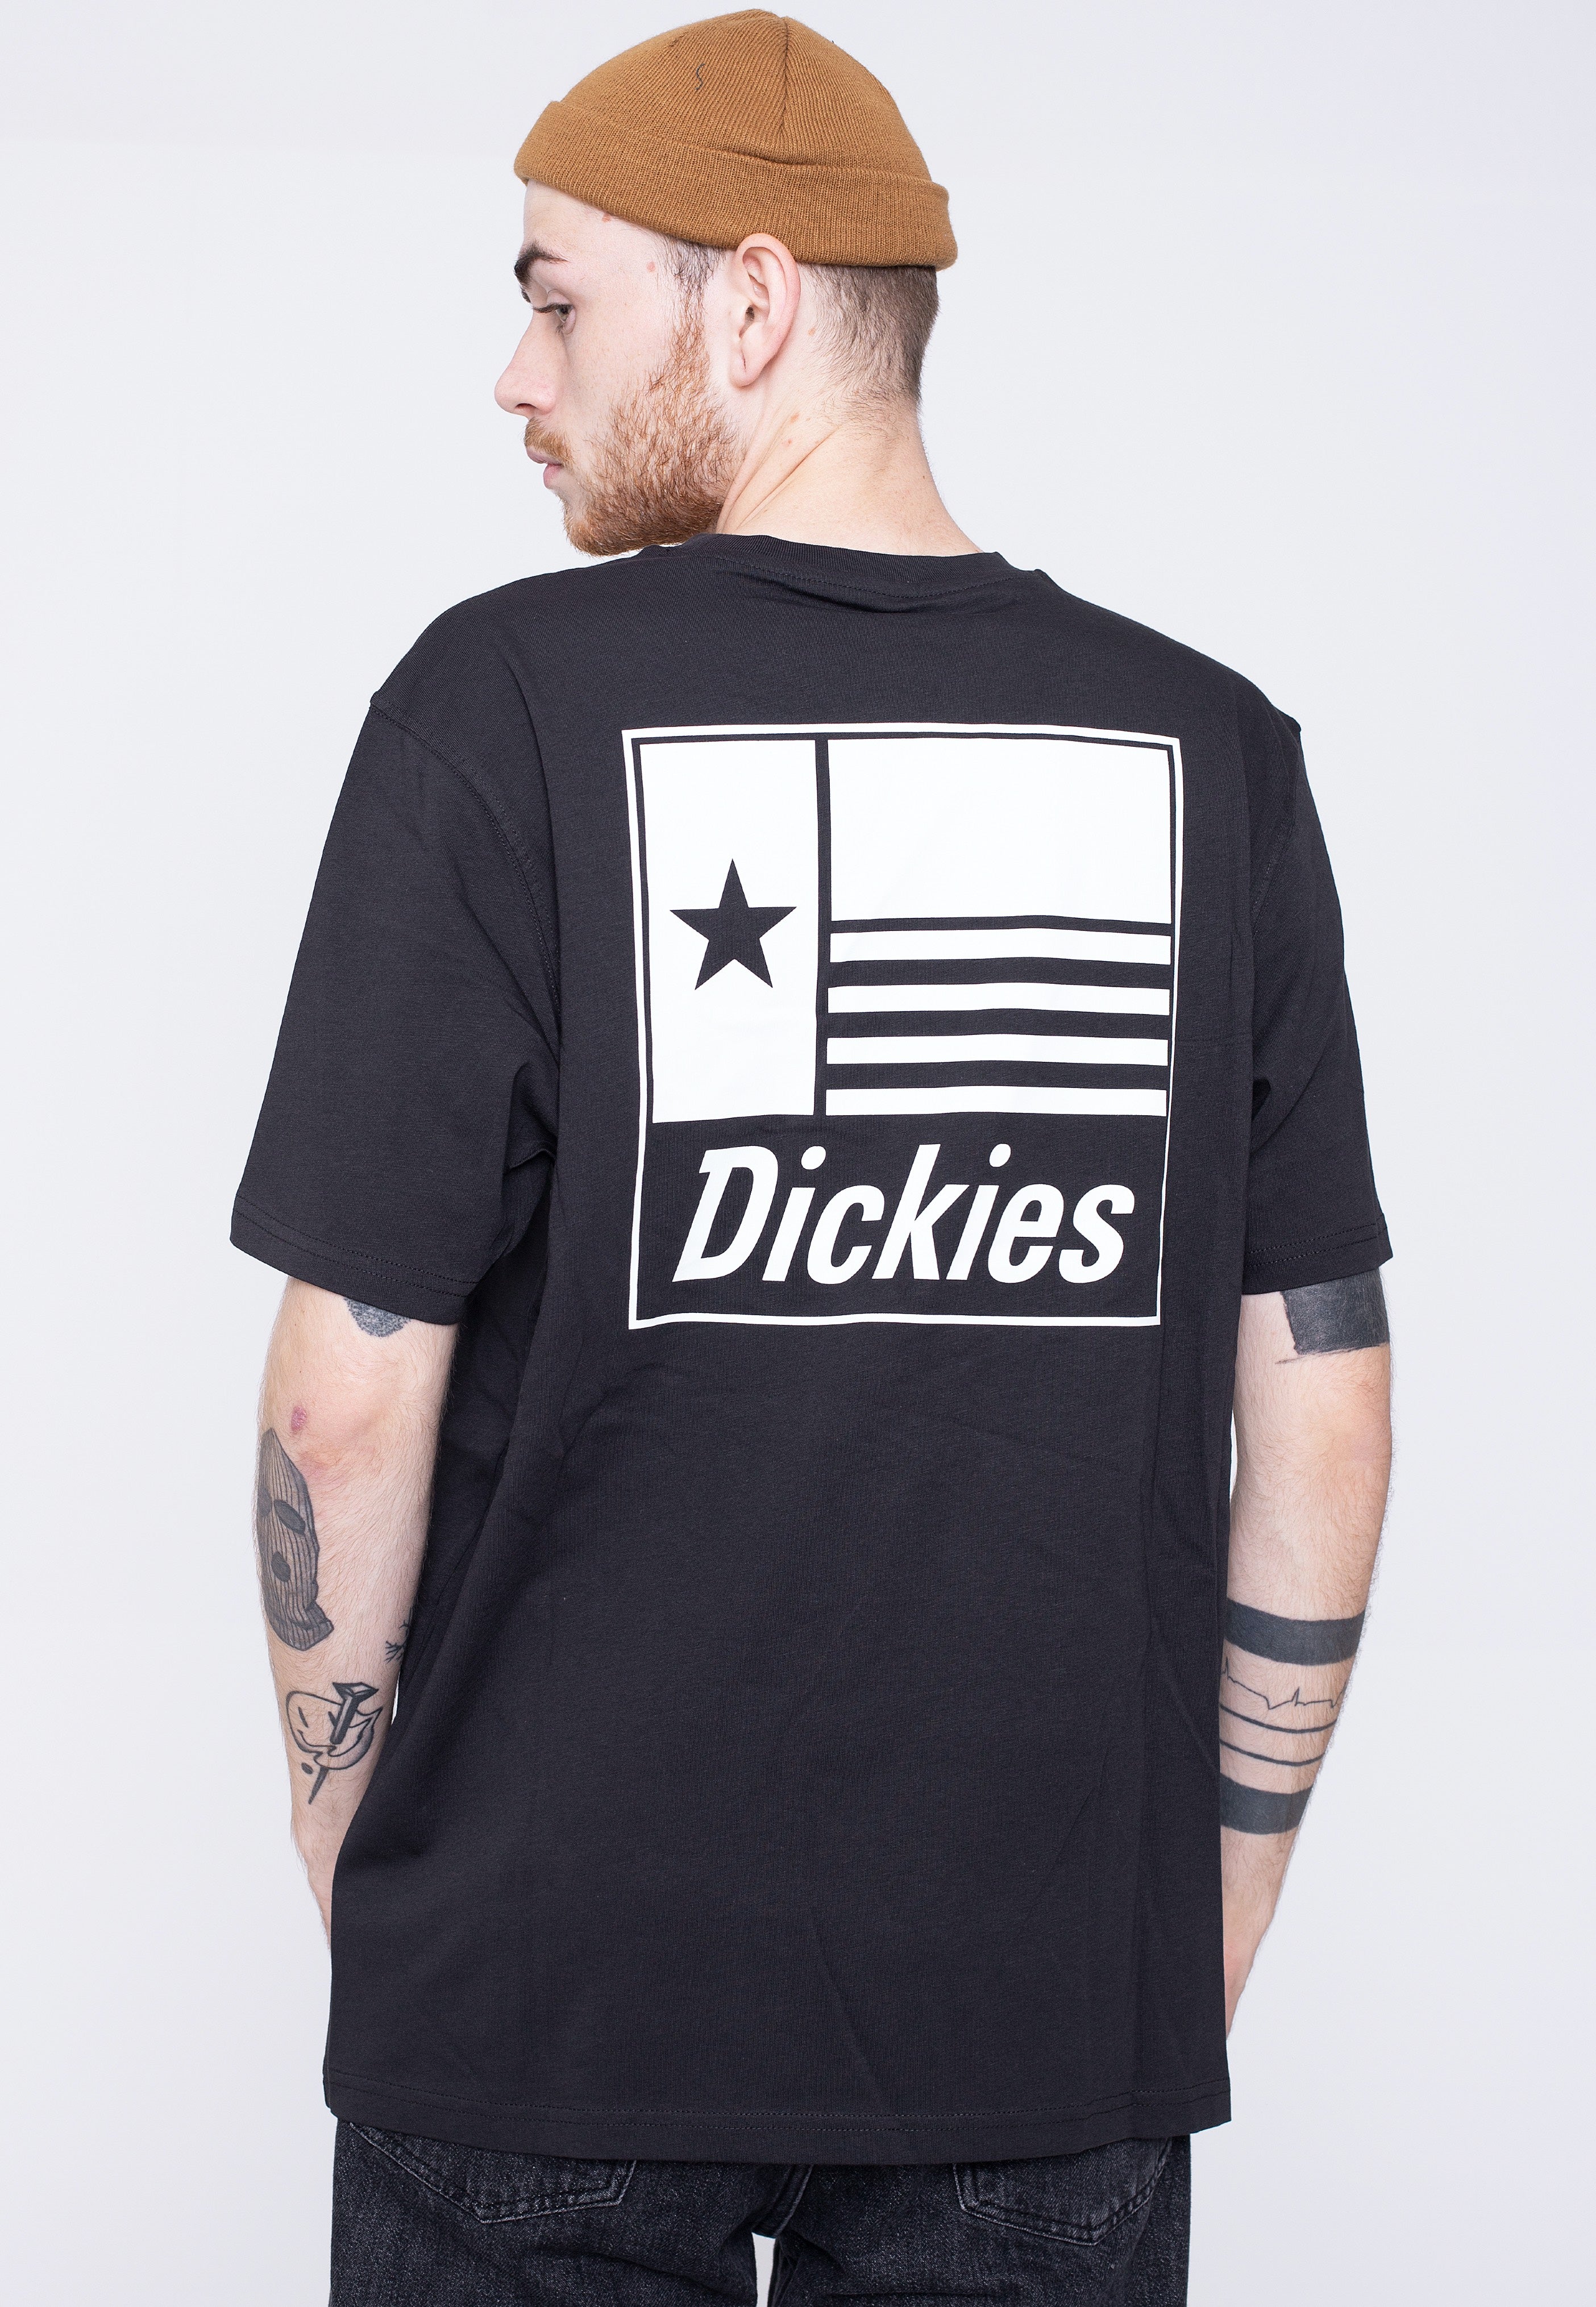 Dickies - Taylor Black - T-Shirt